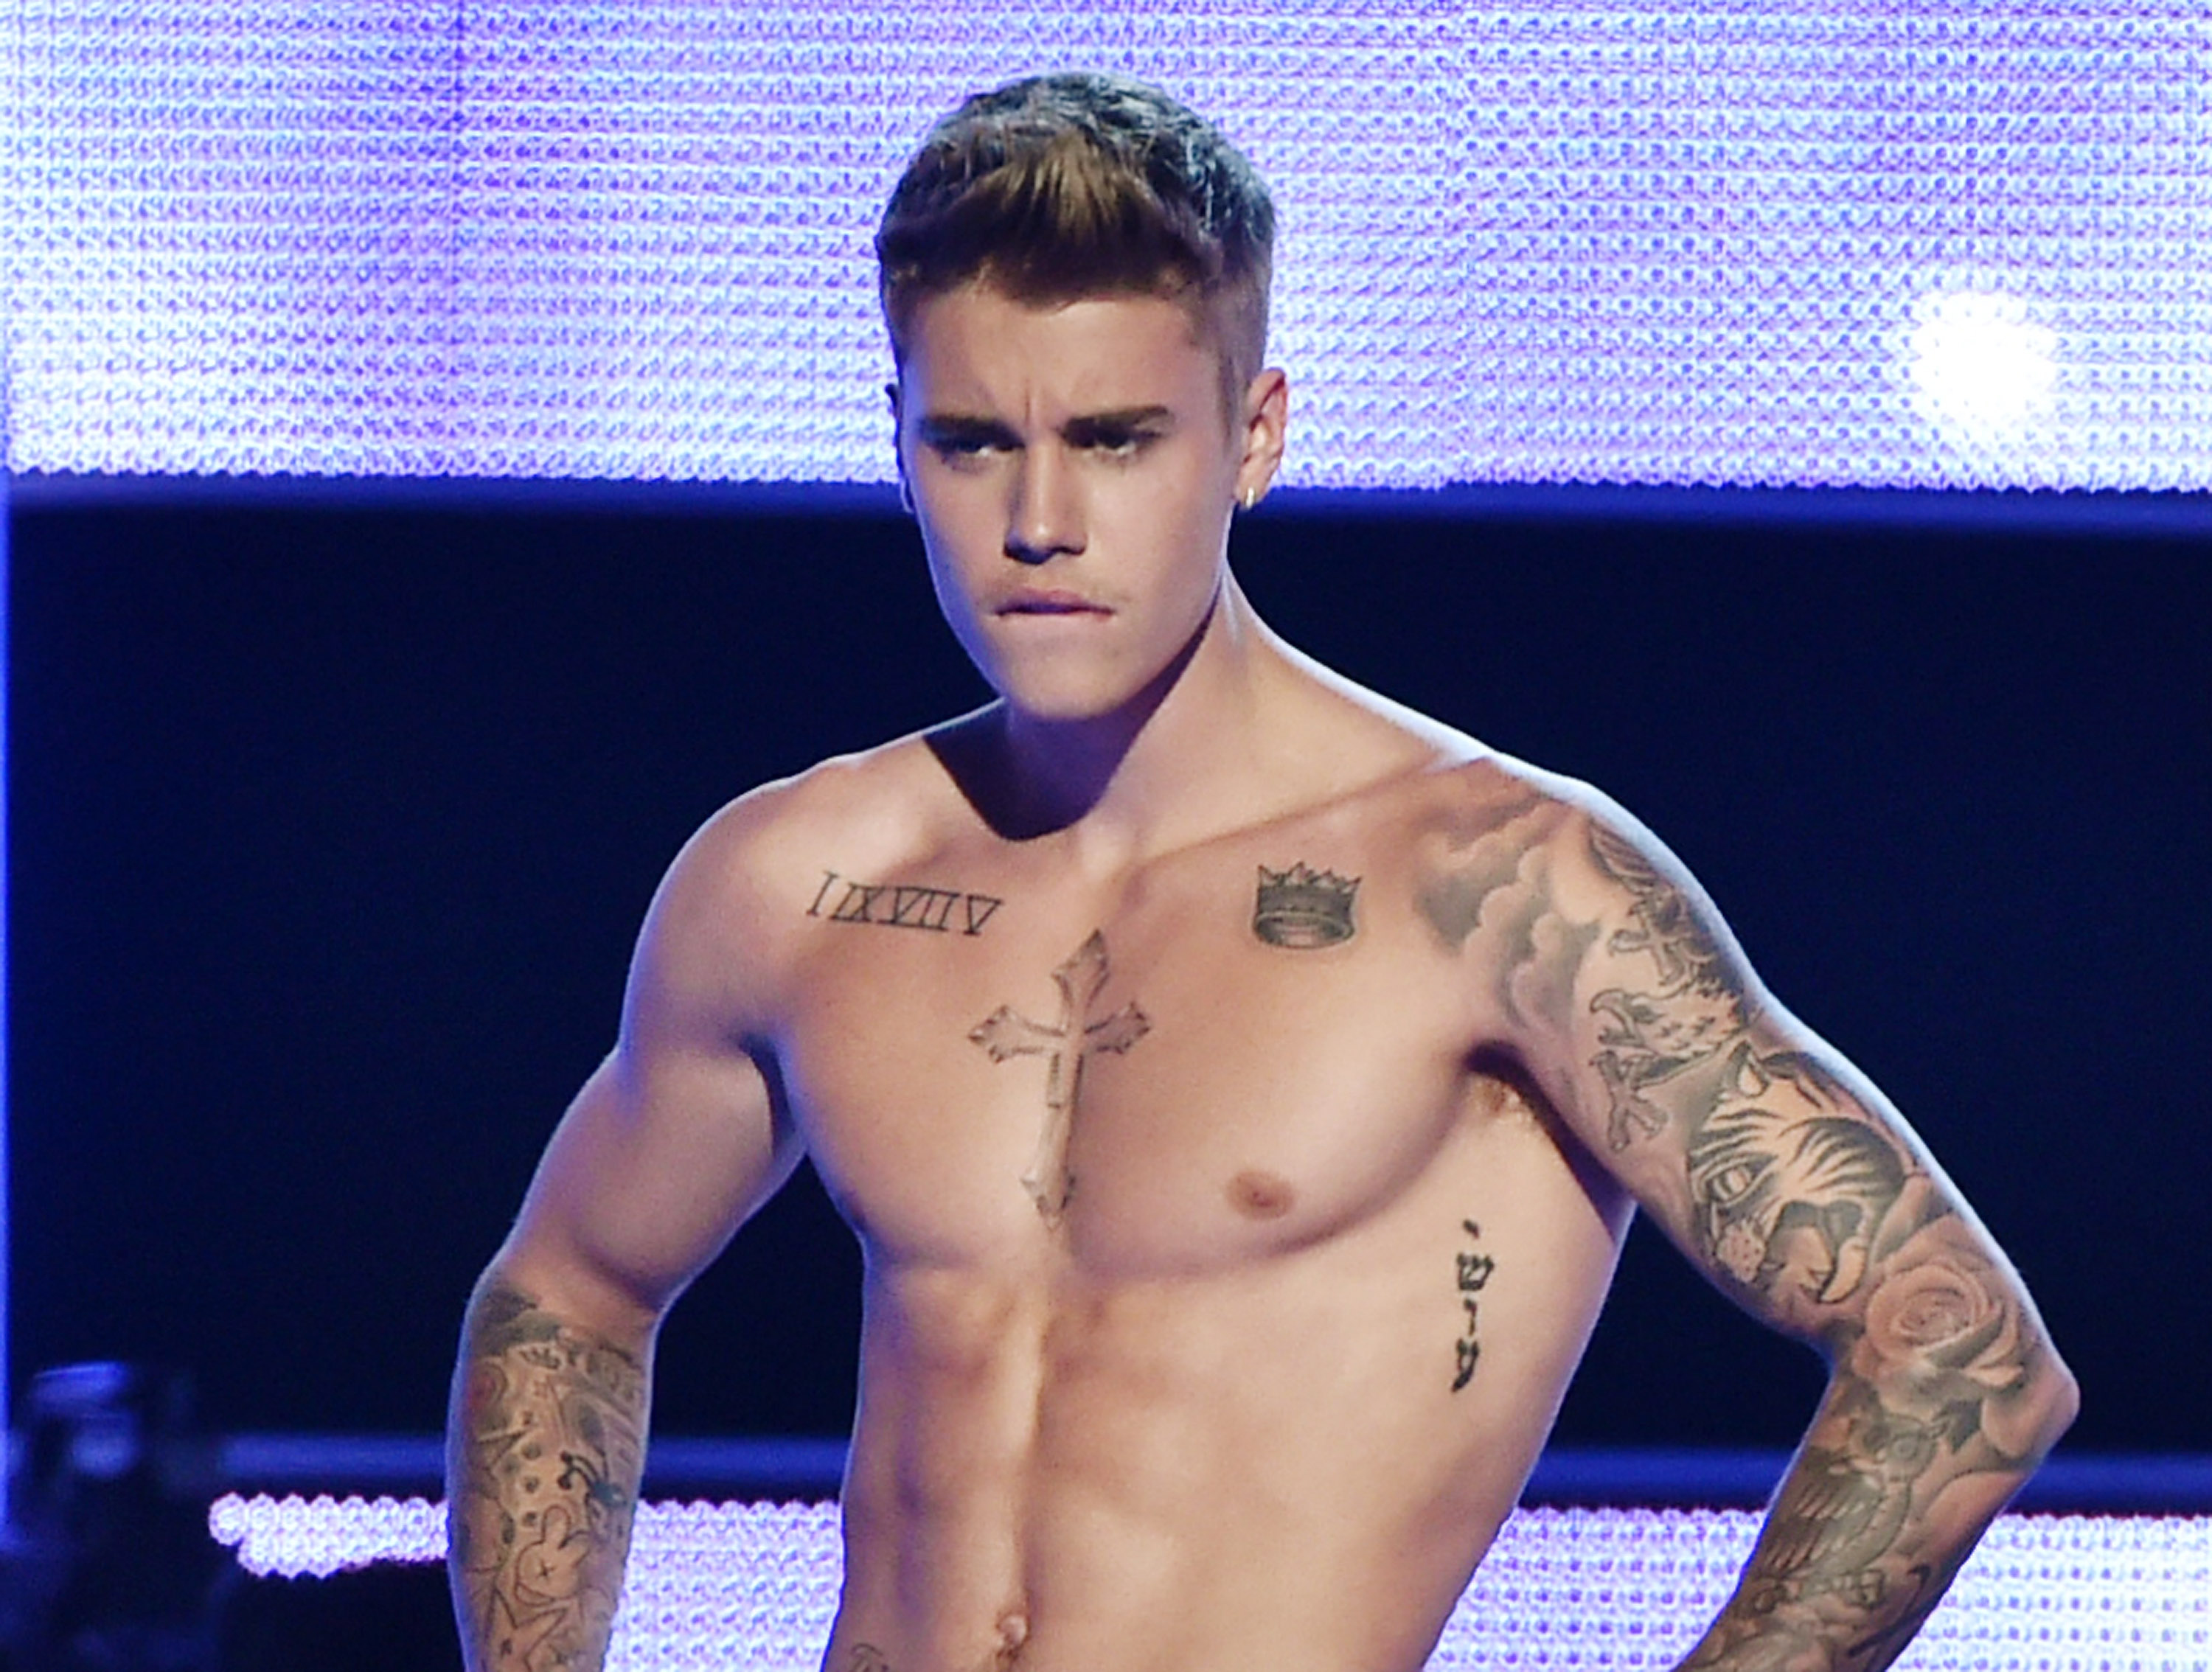 Singer-songwriter Justin Bieber presents onstage at Fashion Rocks 2014 (Theo Wargo&mdash;2014 Getty Images)